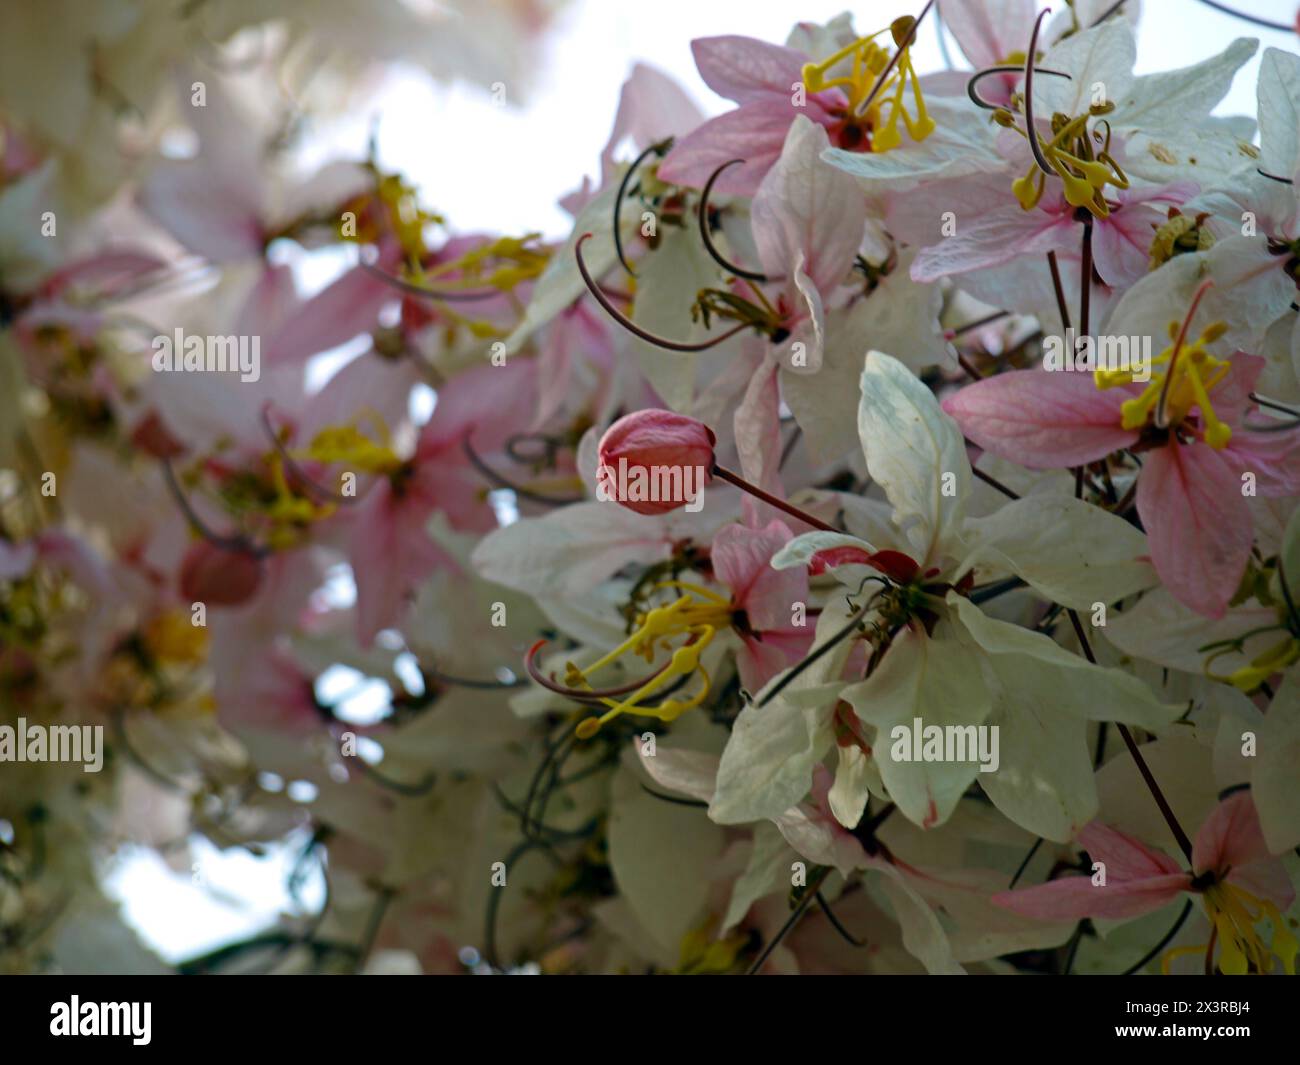 The flowers of pink shower tree, wishing tree, or dwarf apple blossom tree (Cassia Bakeriana). Stock Photo